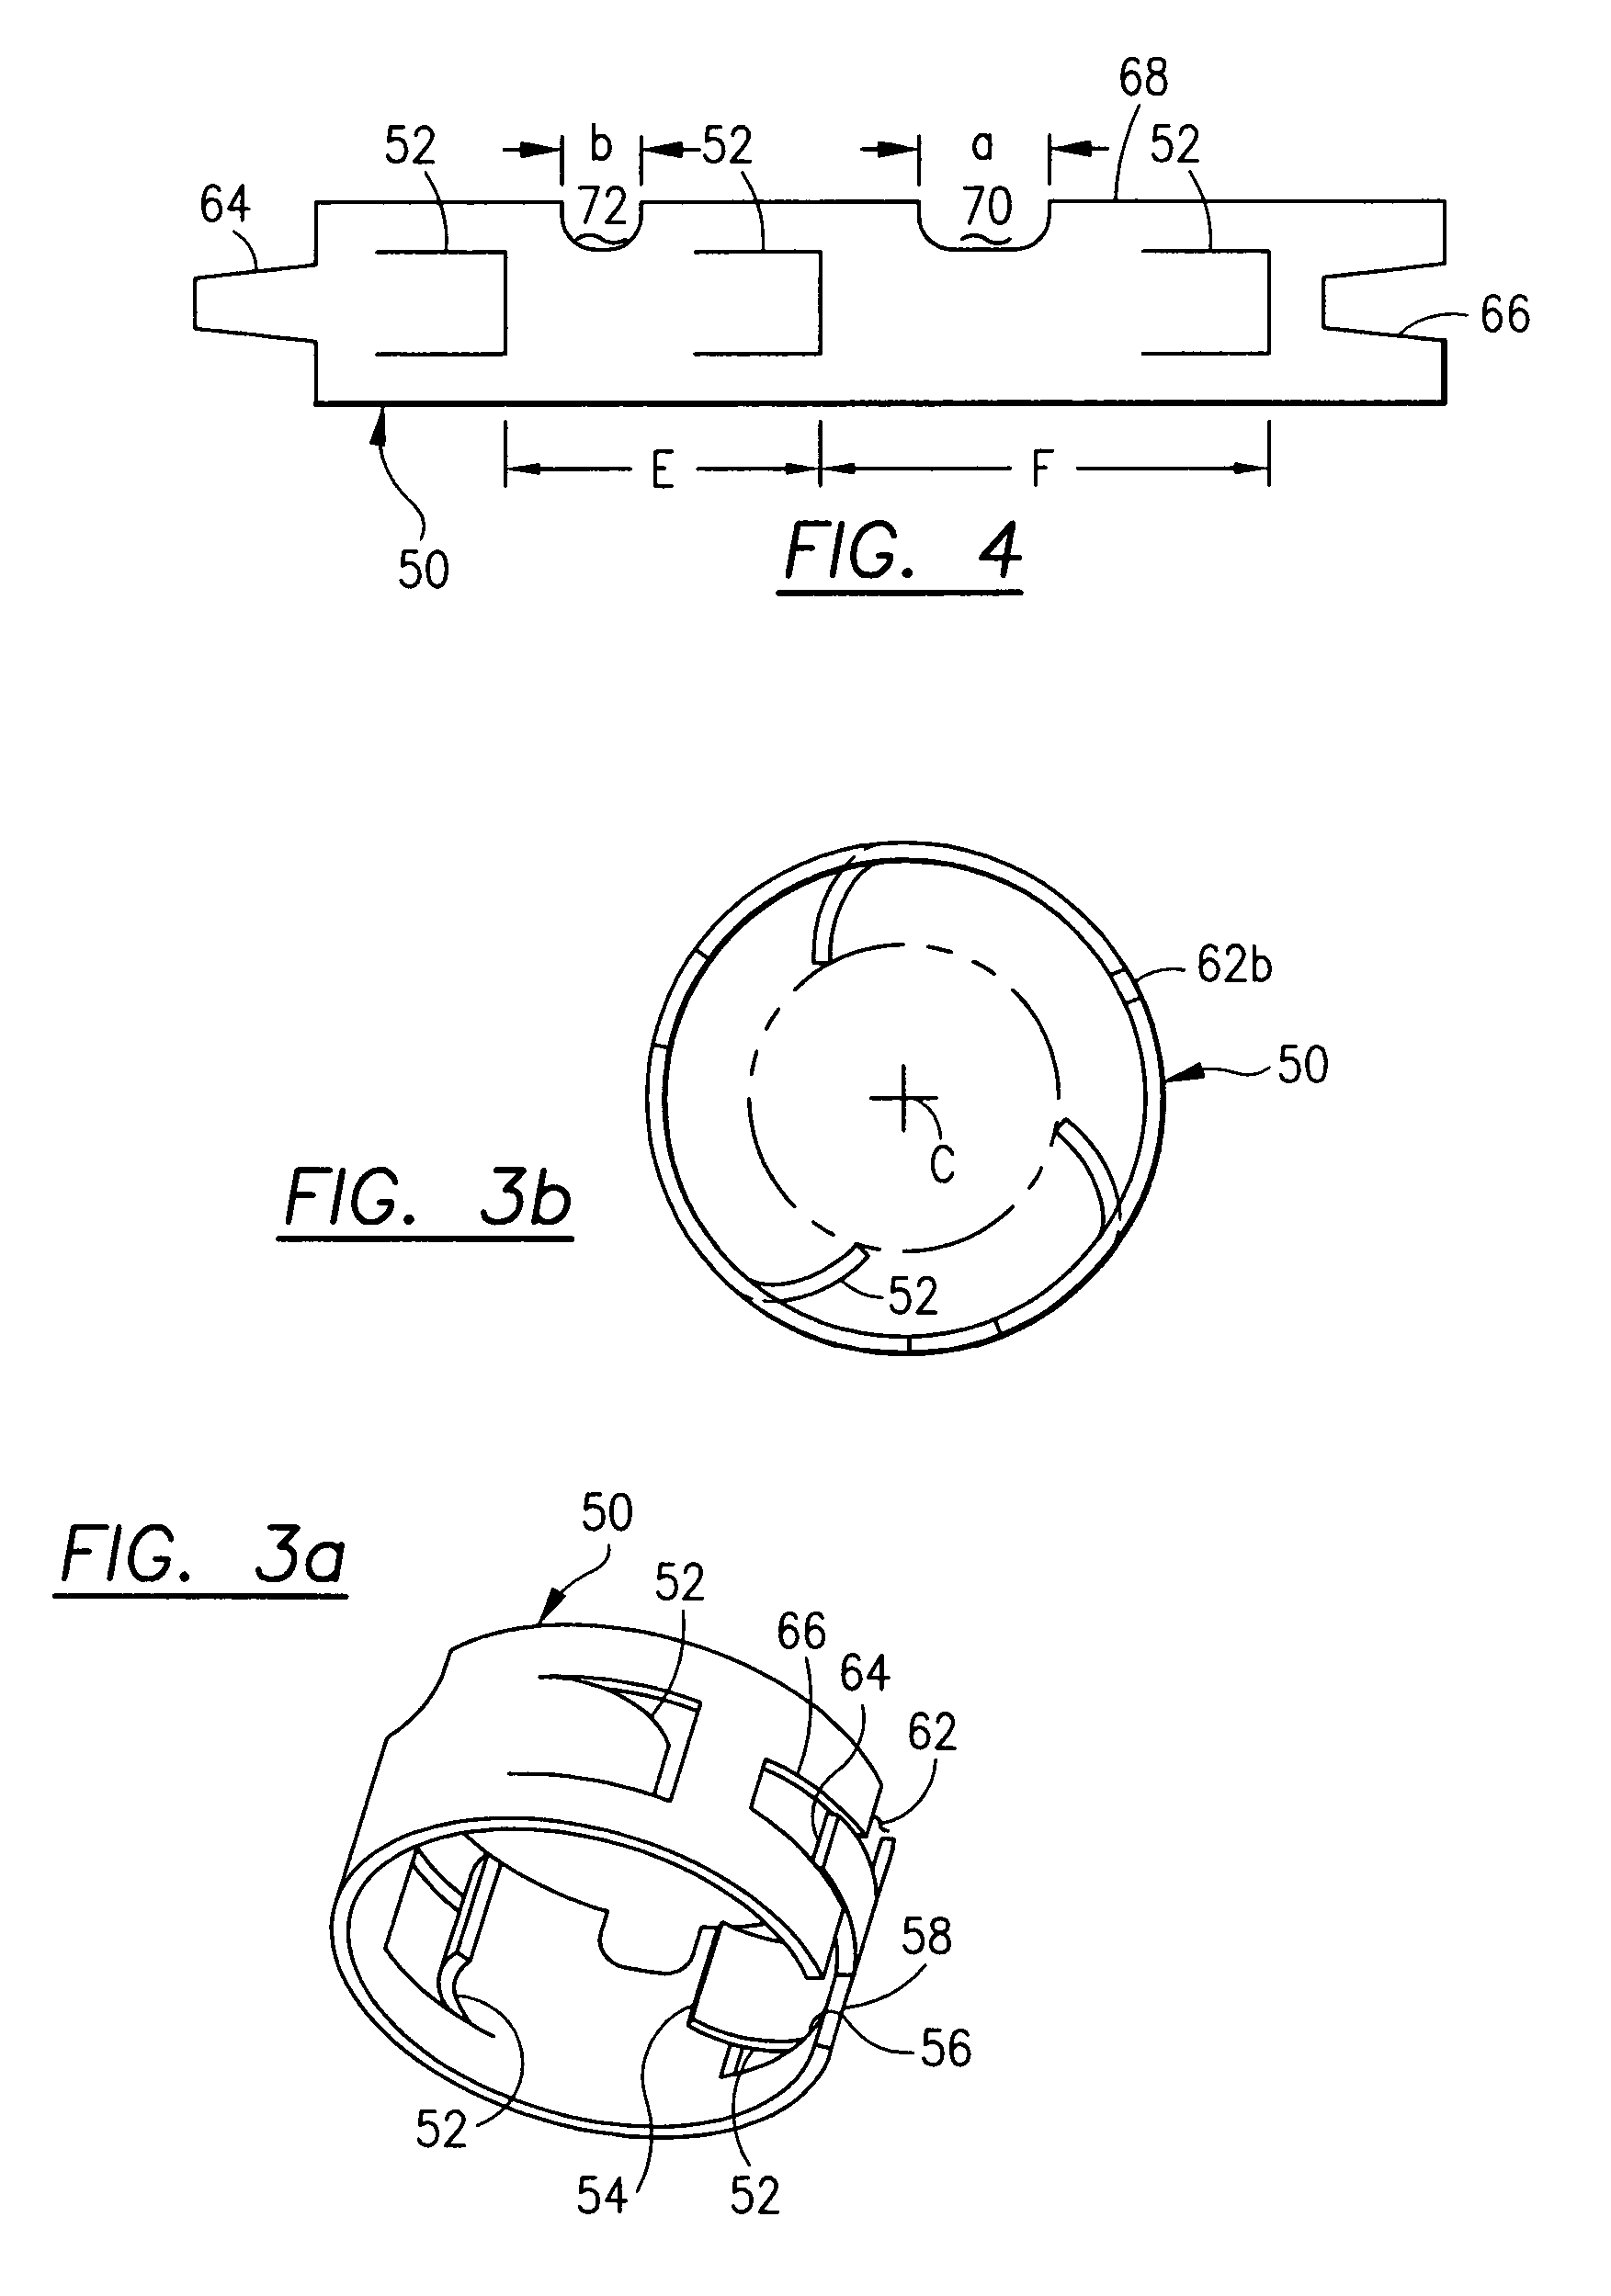 Locking nut and bolt system with enhanced locking